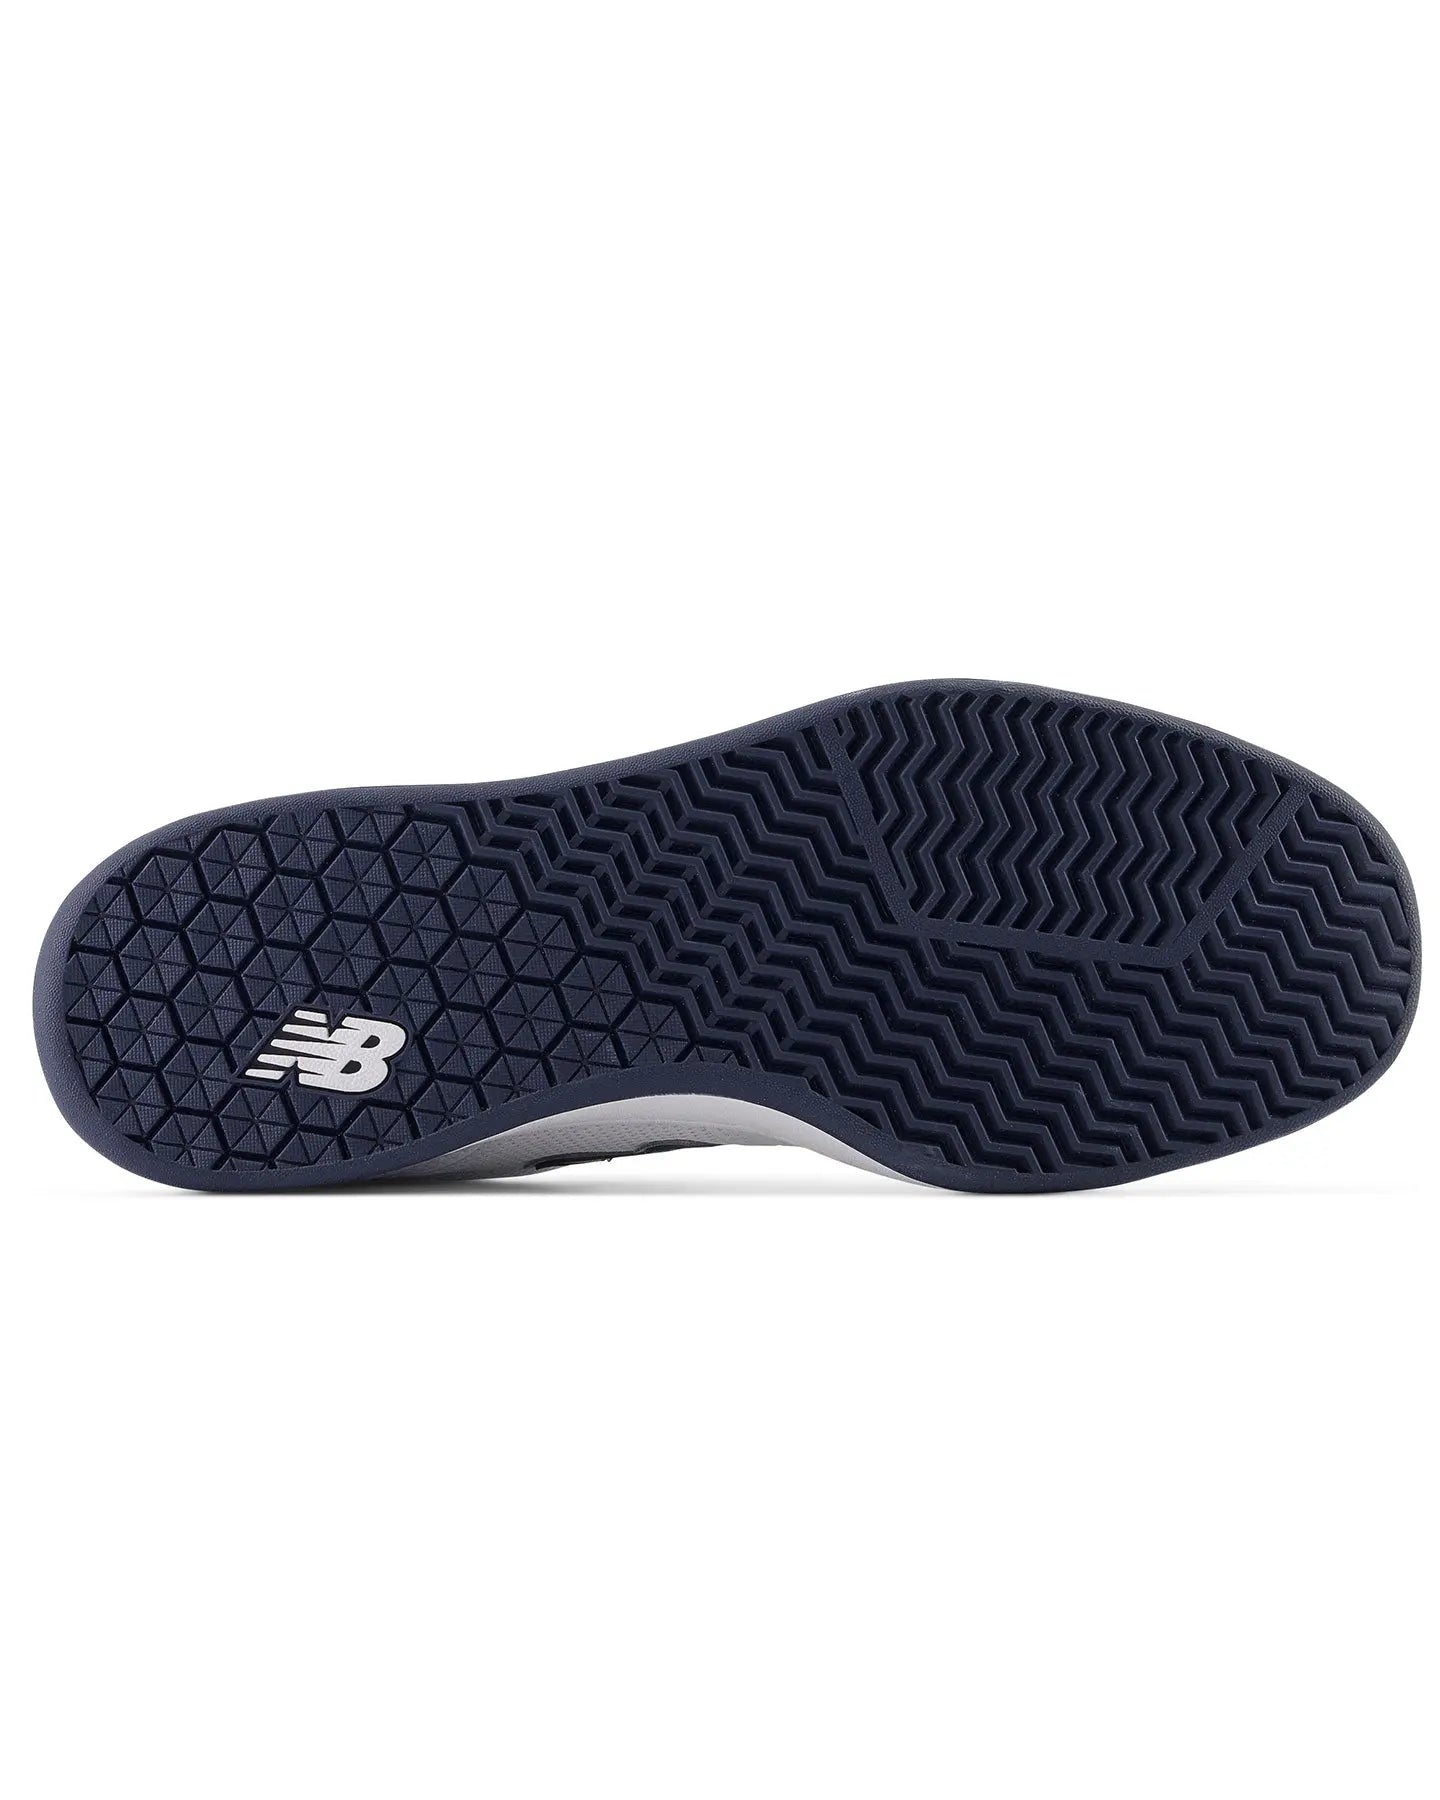 New Balance 440 - White / Navy Footwear